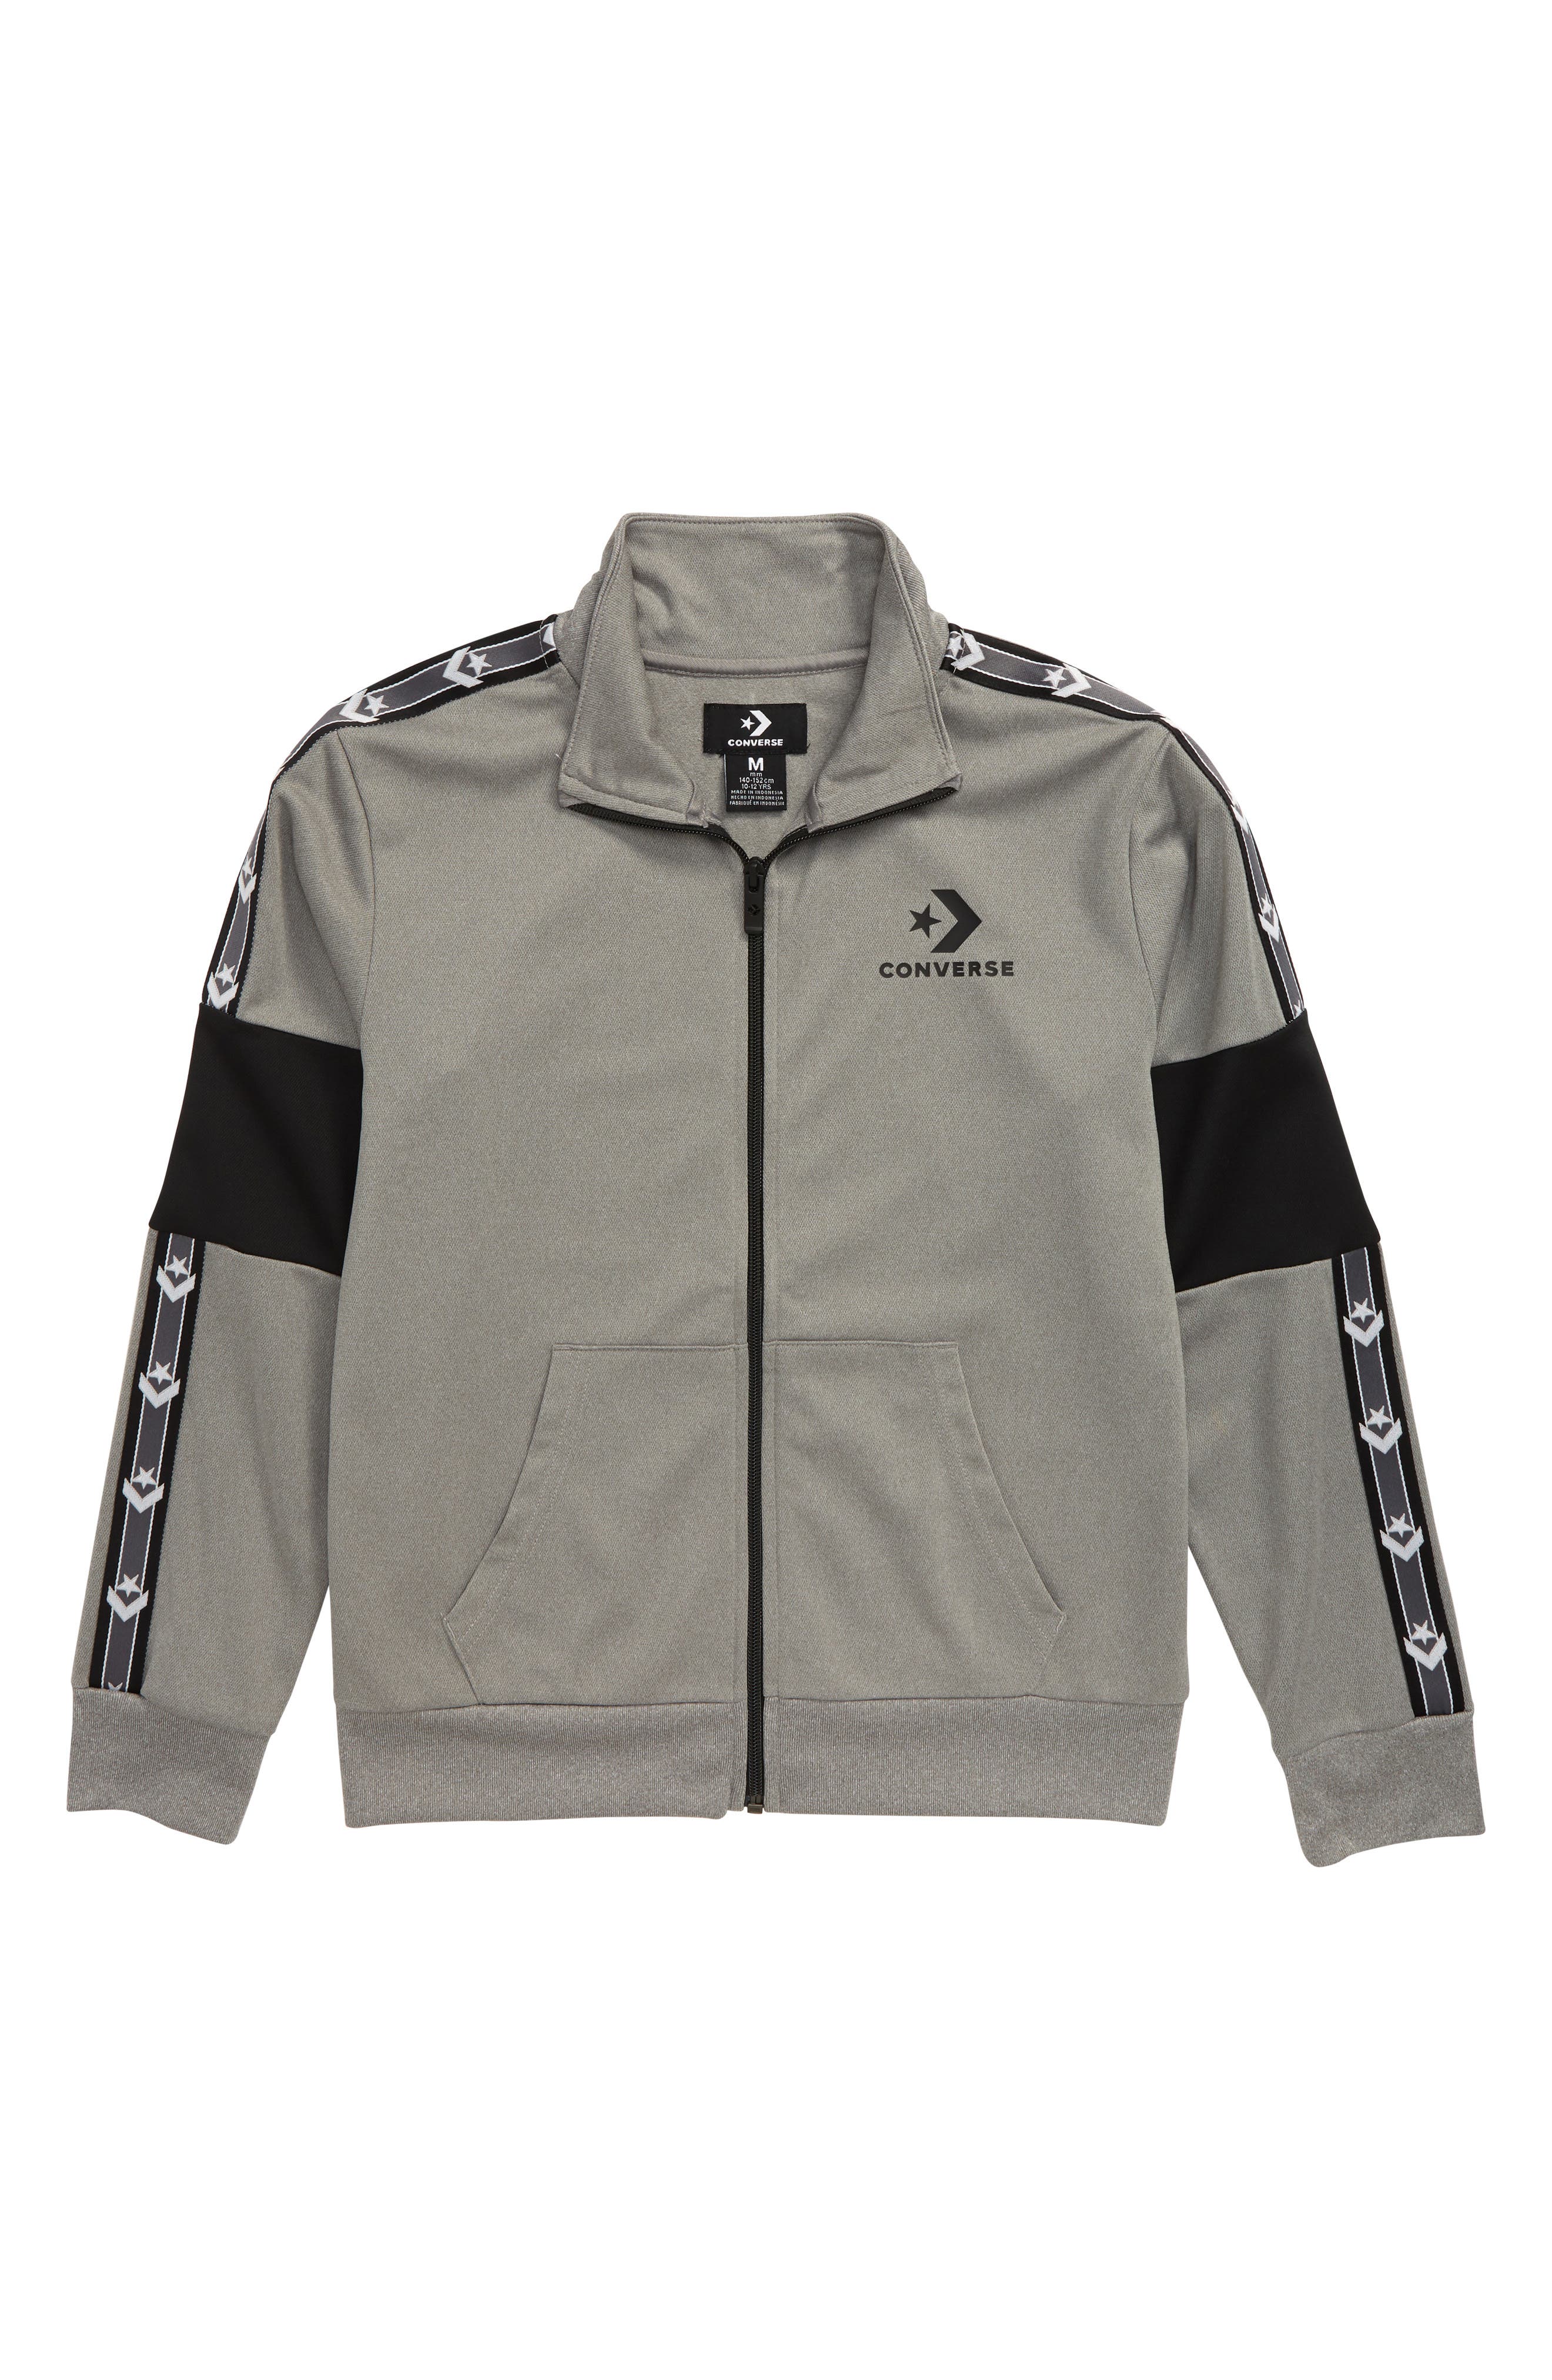 converse luxe star chevron track jacket